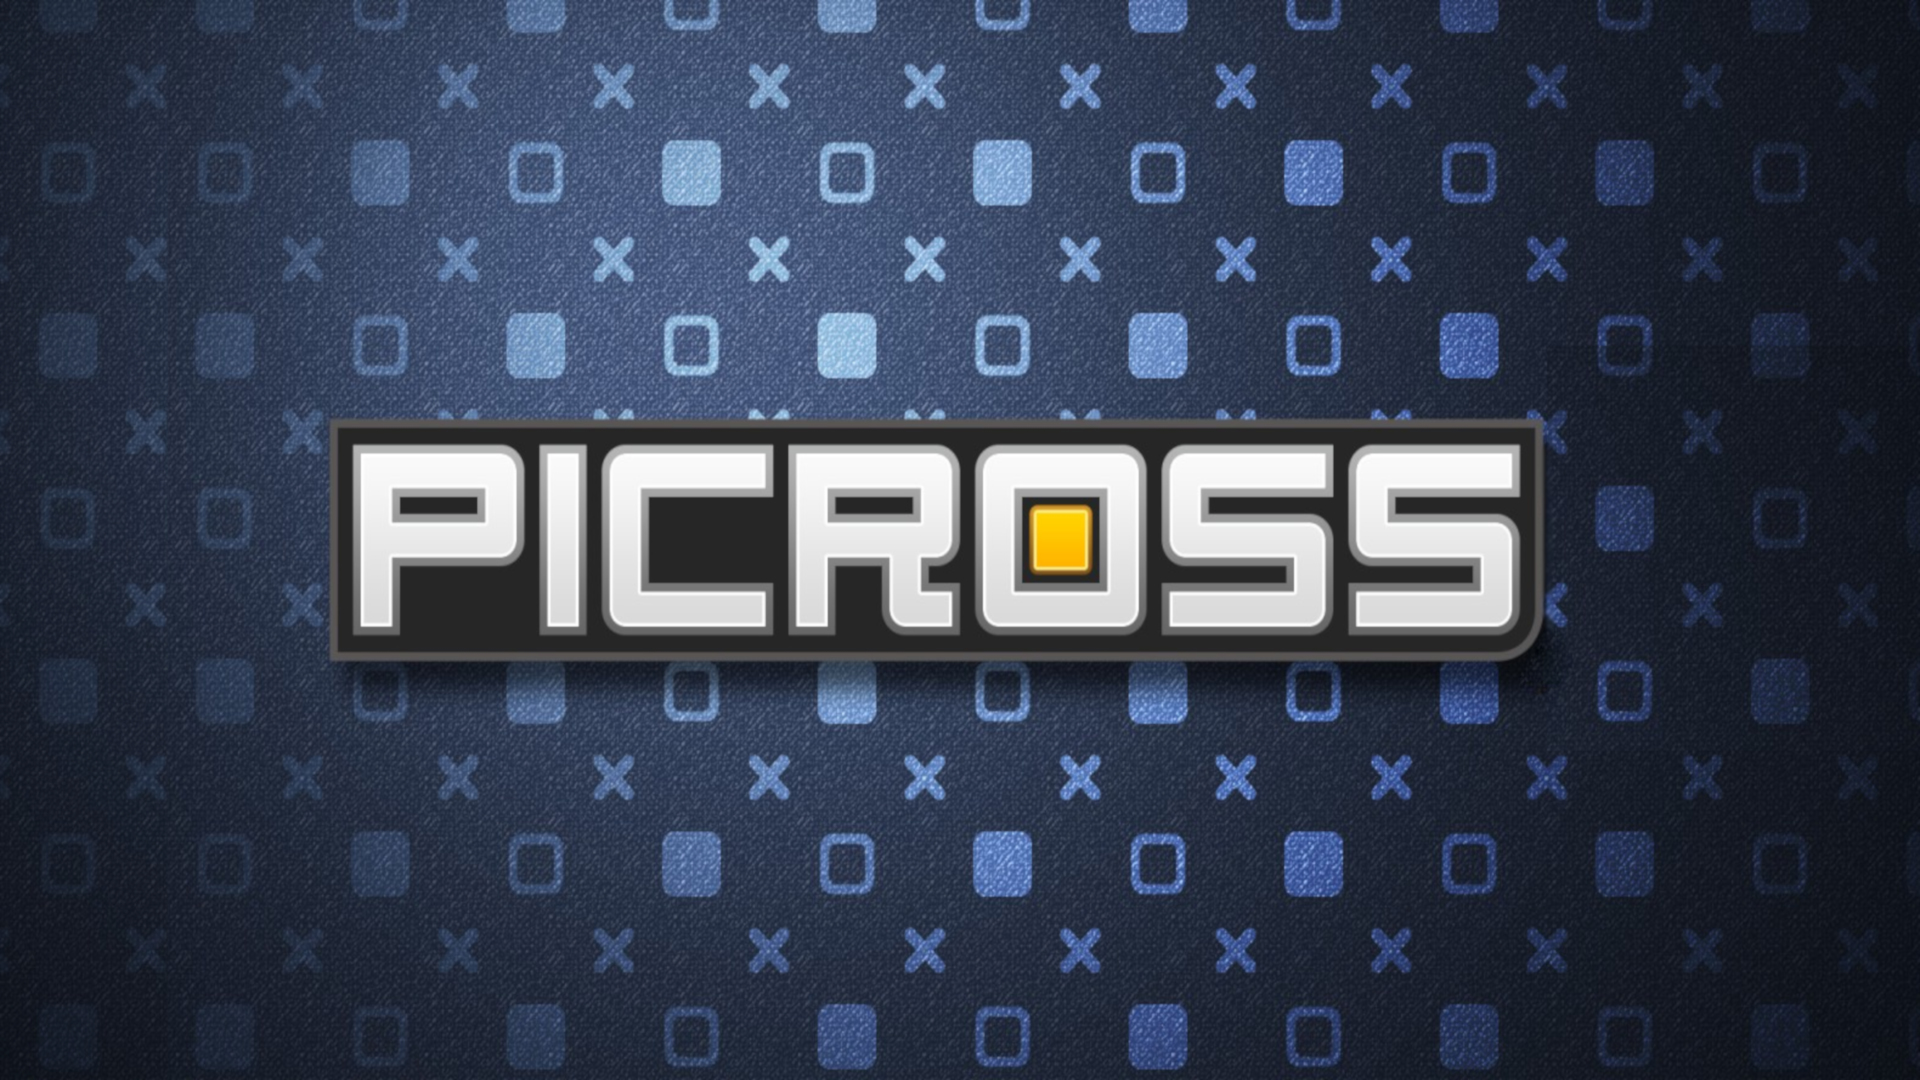 Picross 2